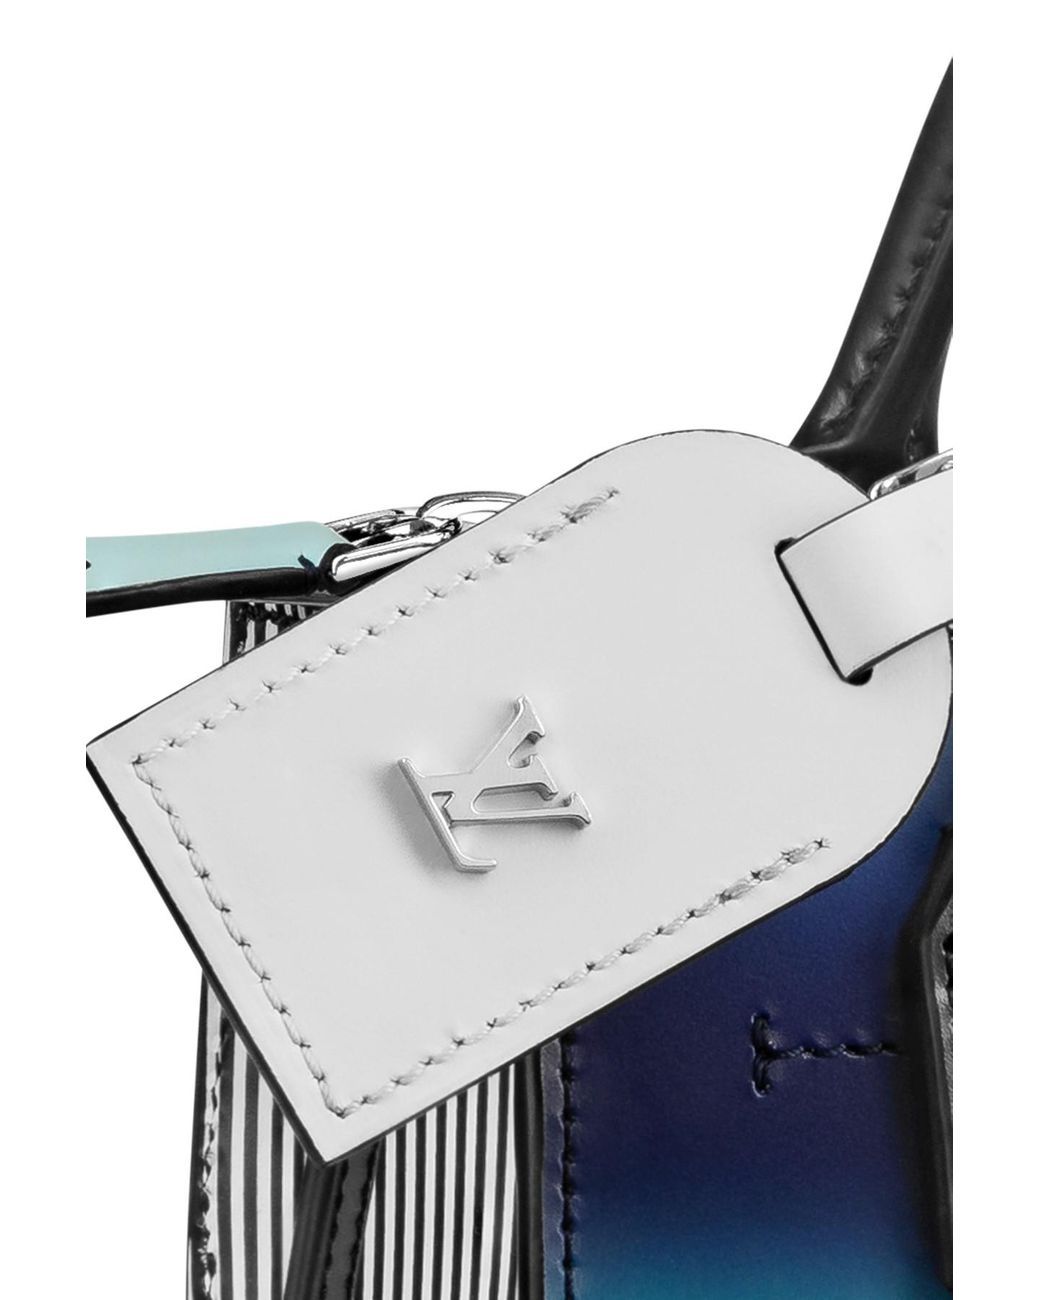 Louis Vuitton City Steamer Mini Price